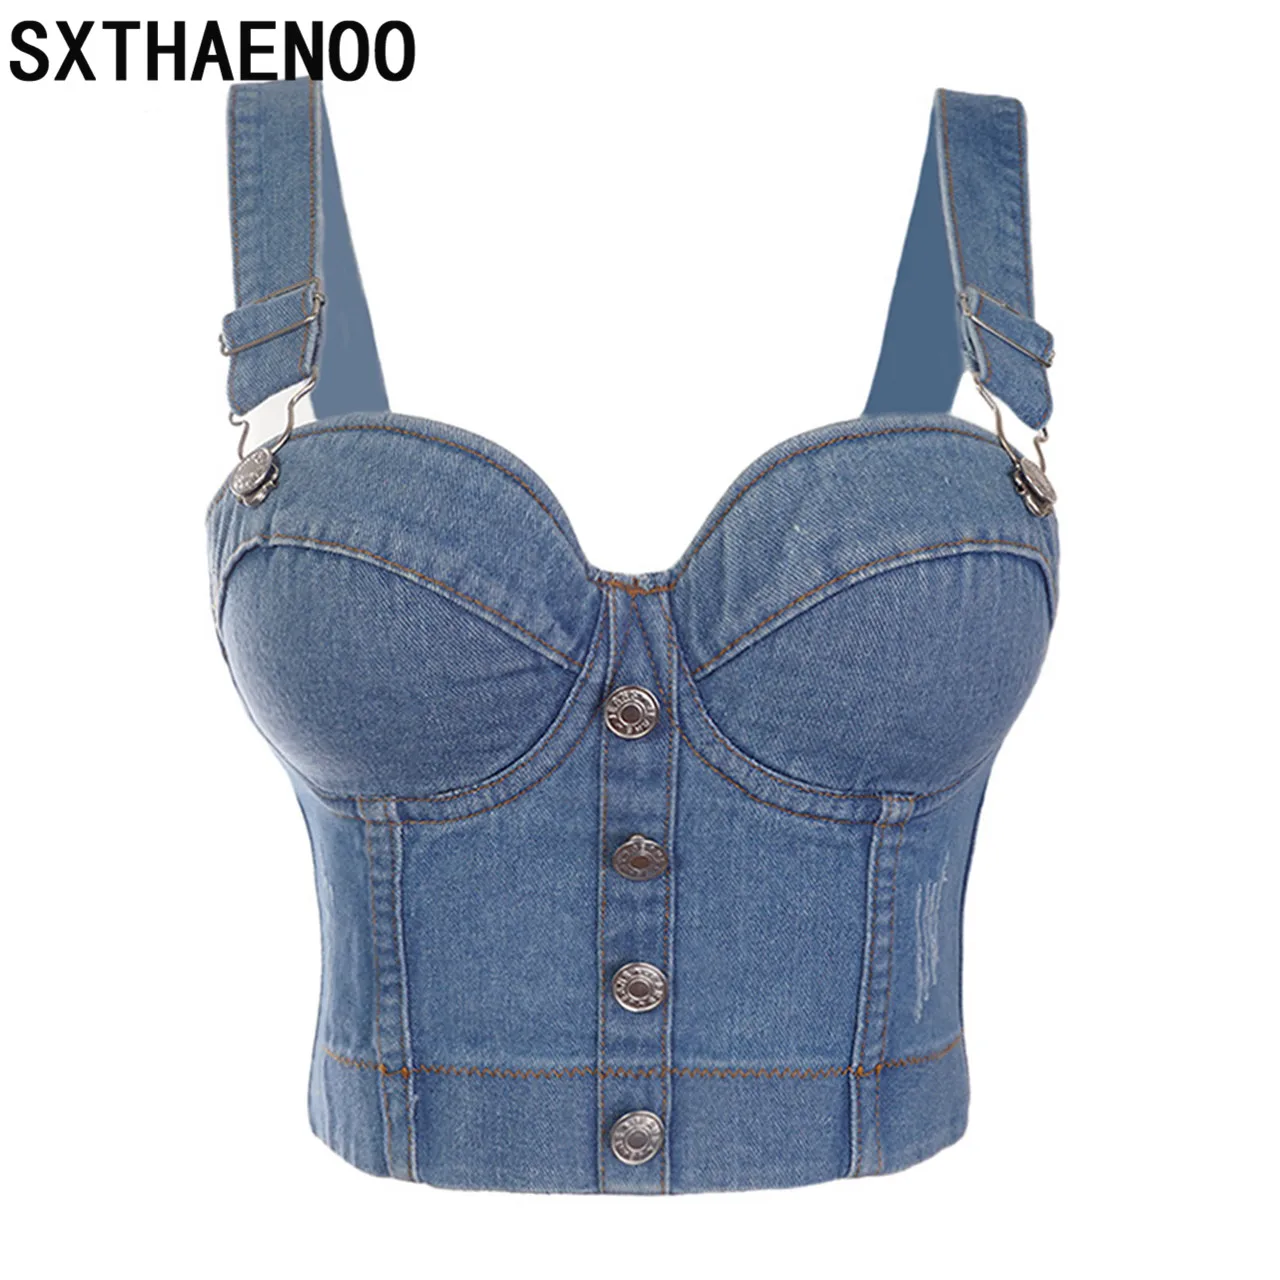 SXTHAENOO Fashion Sexy Denim Jeans Women's Button Bustier Bra Night Club Party Cropped Top Vest Plus Size